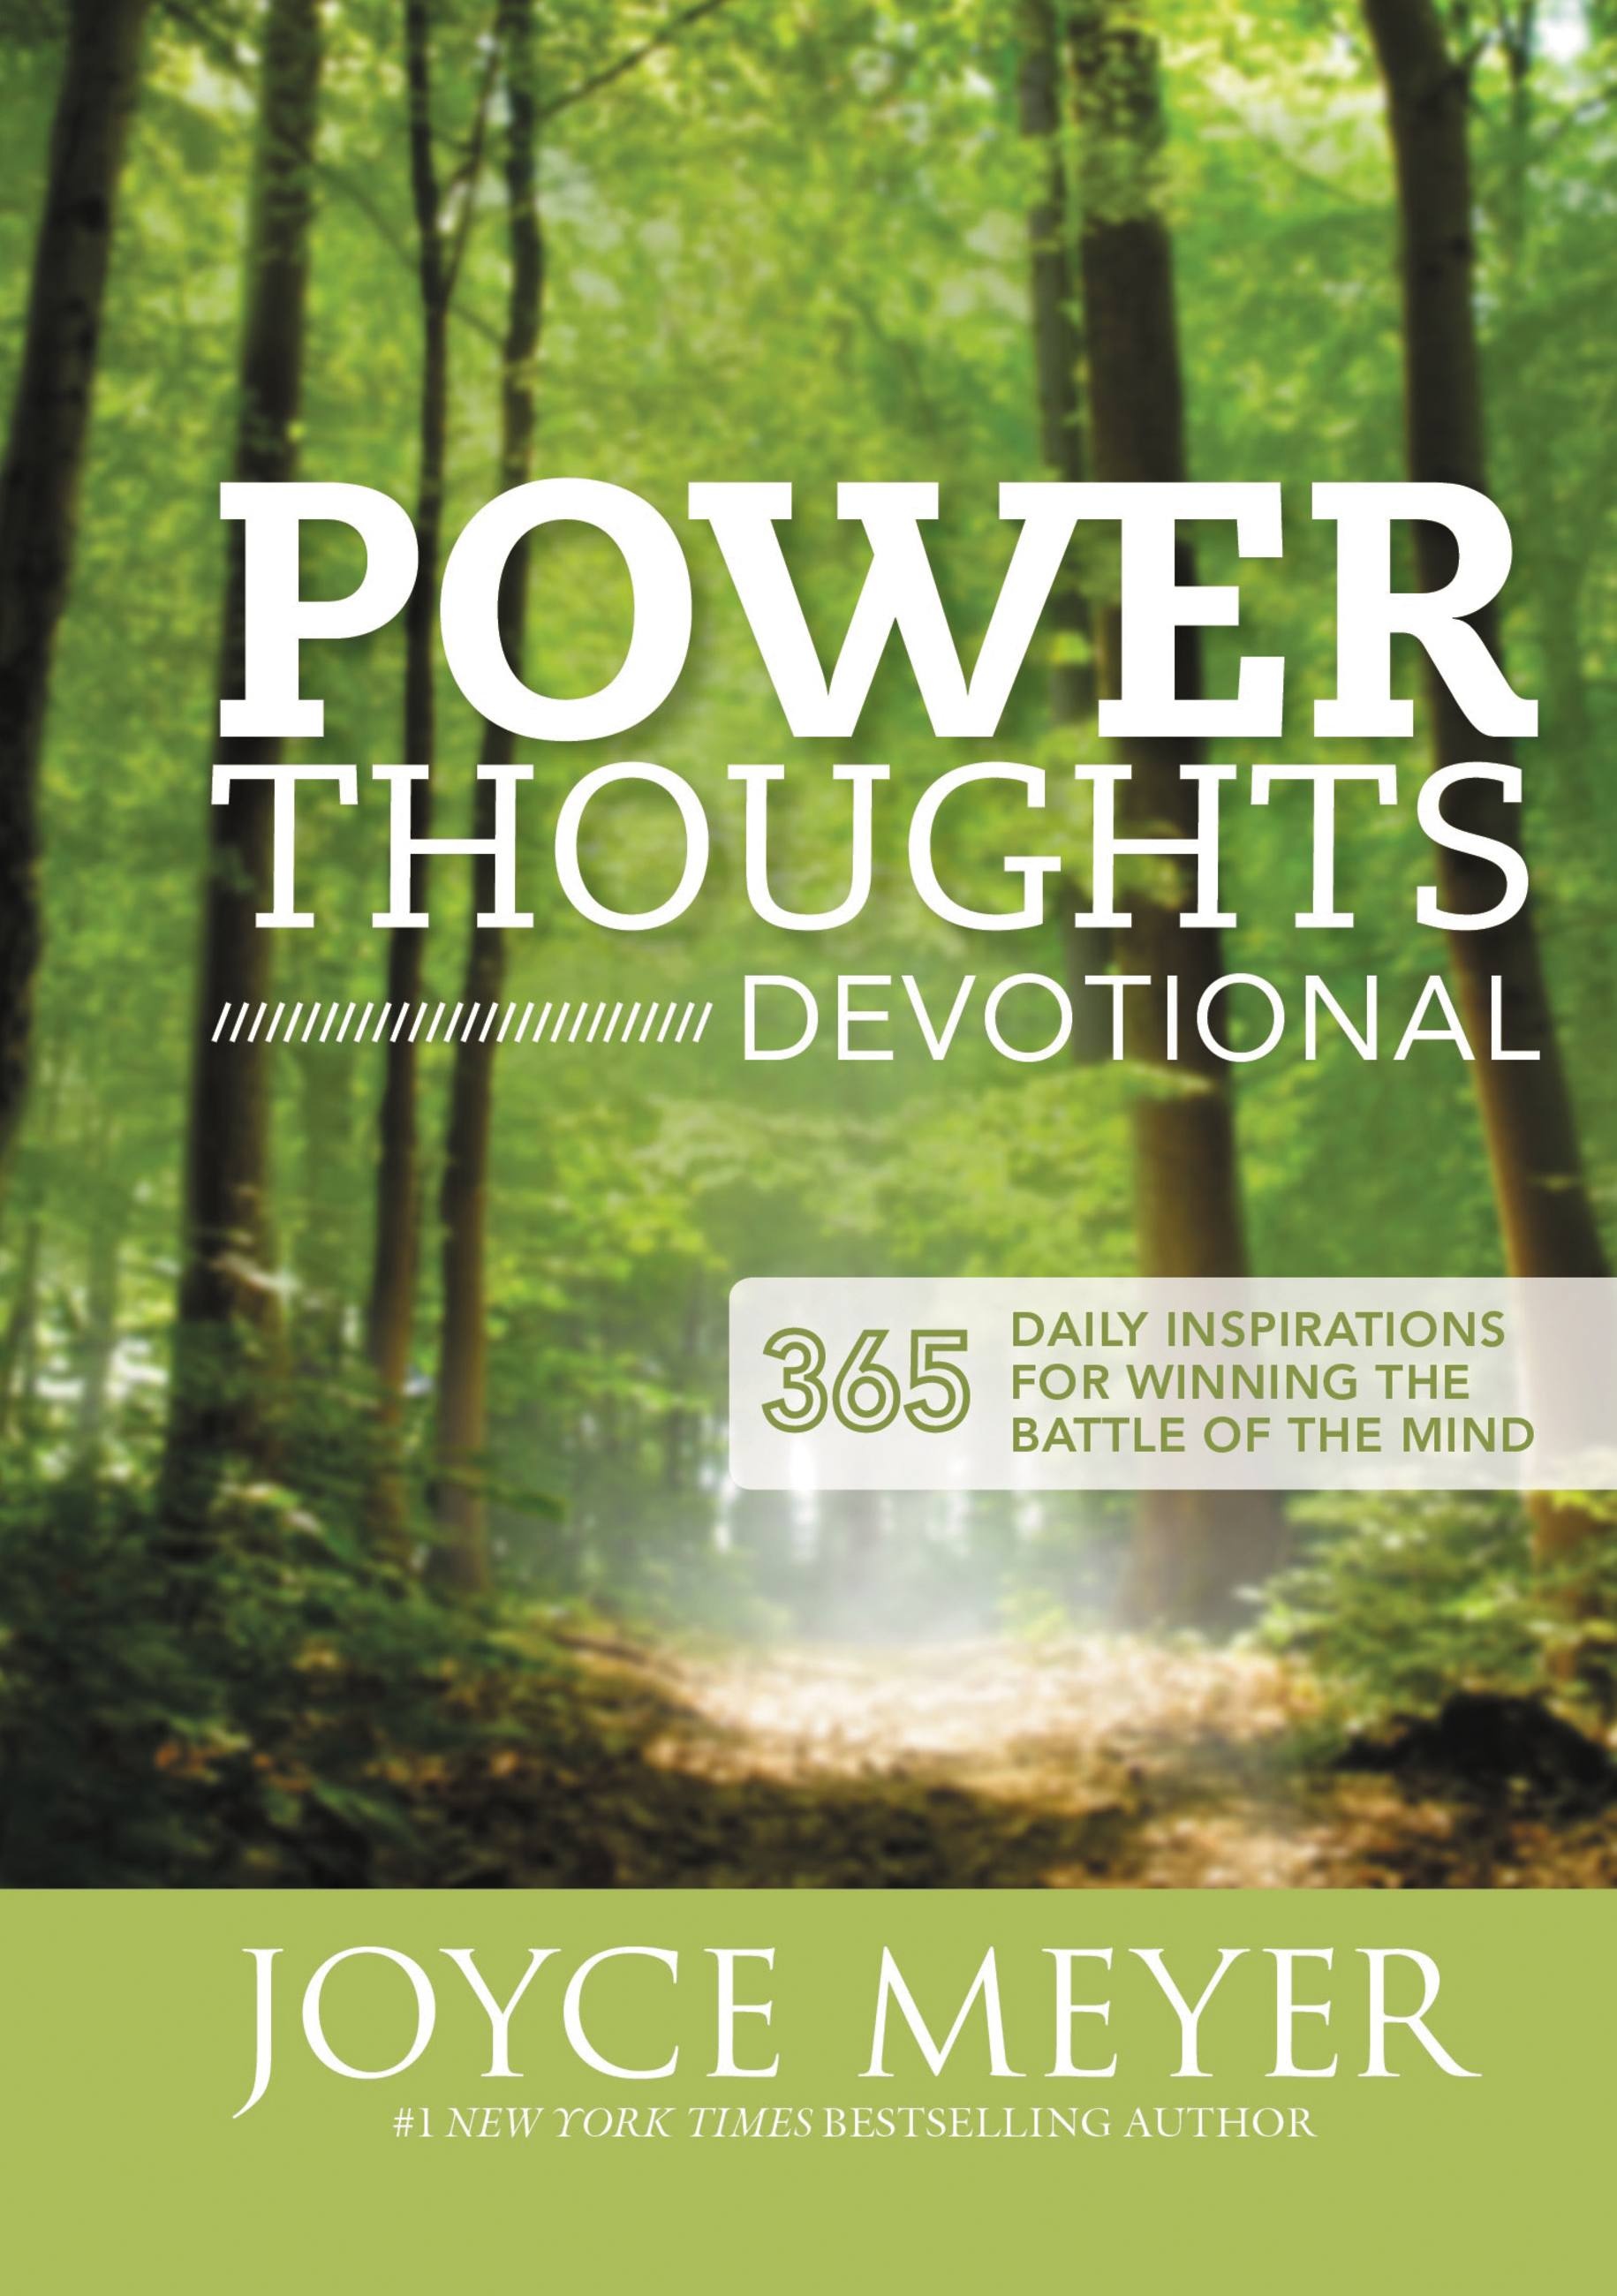 DOWNLOAD PDF: Power Thoughts Devotional by Joyce Meyer 18